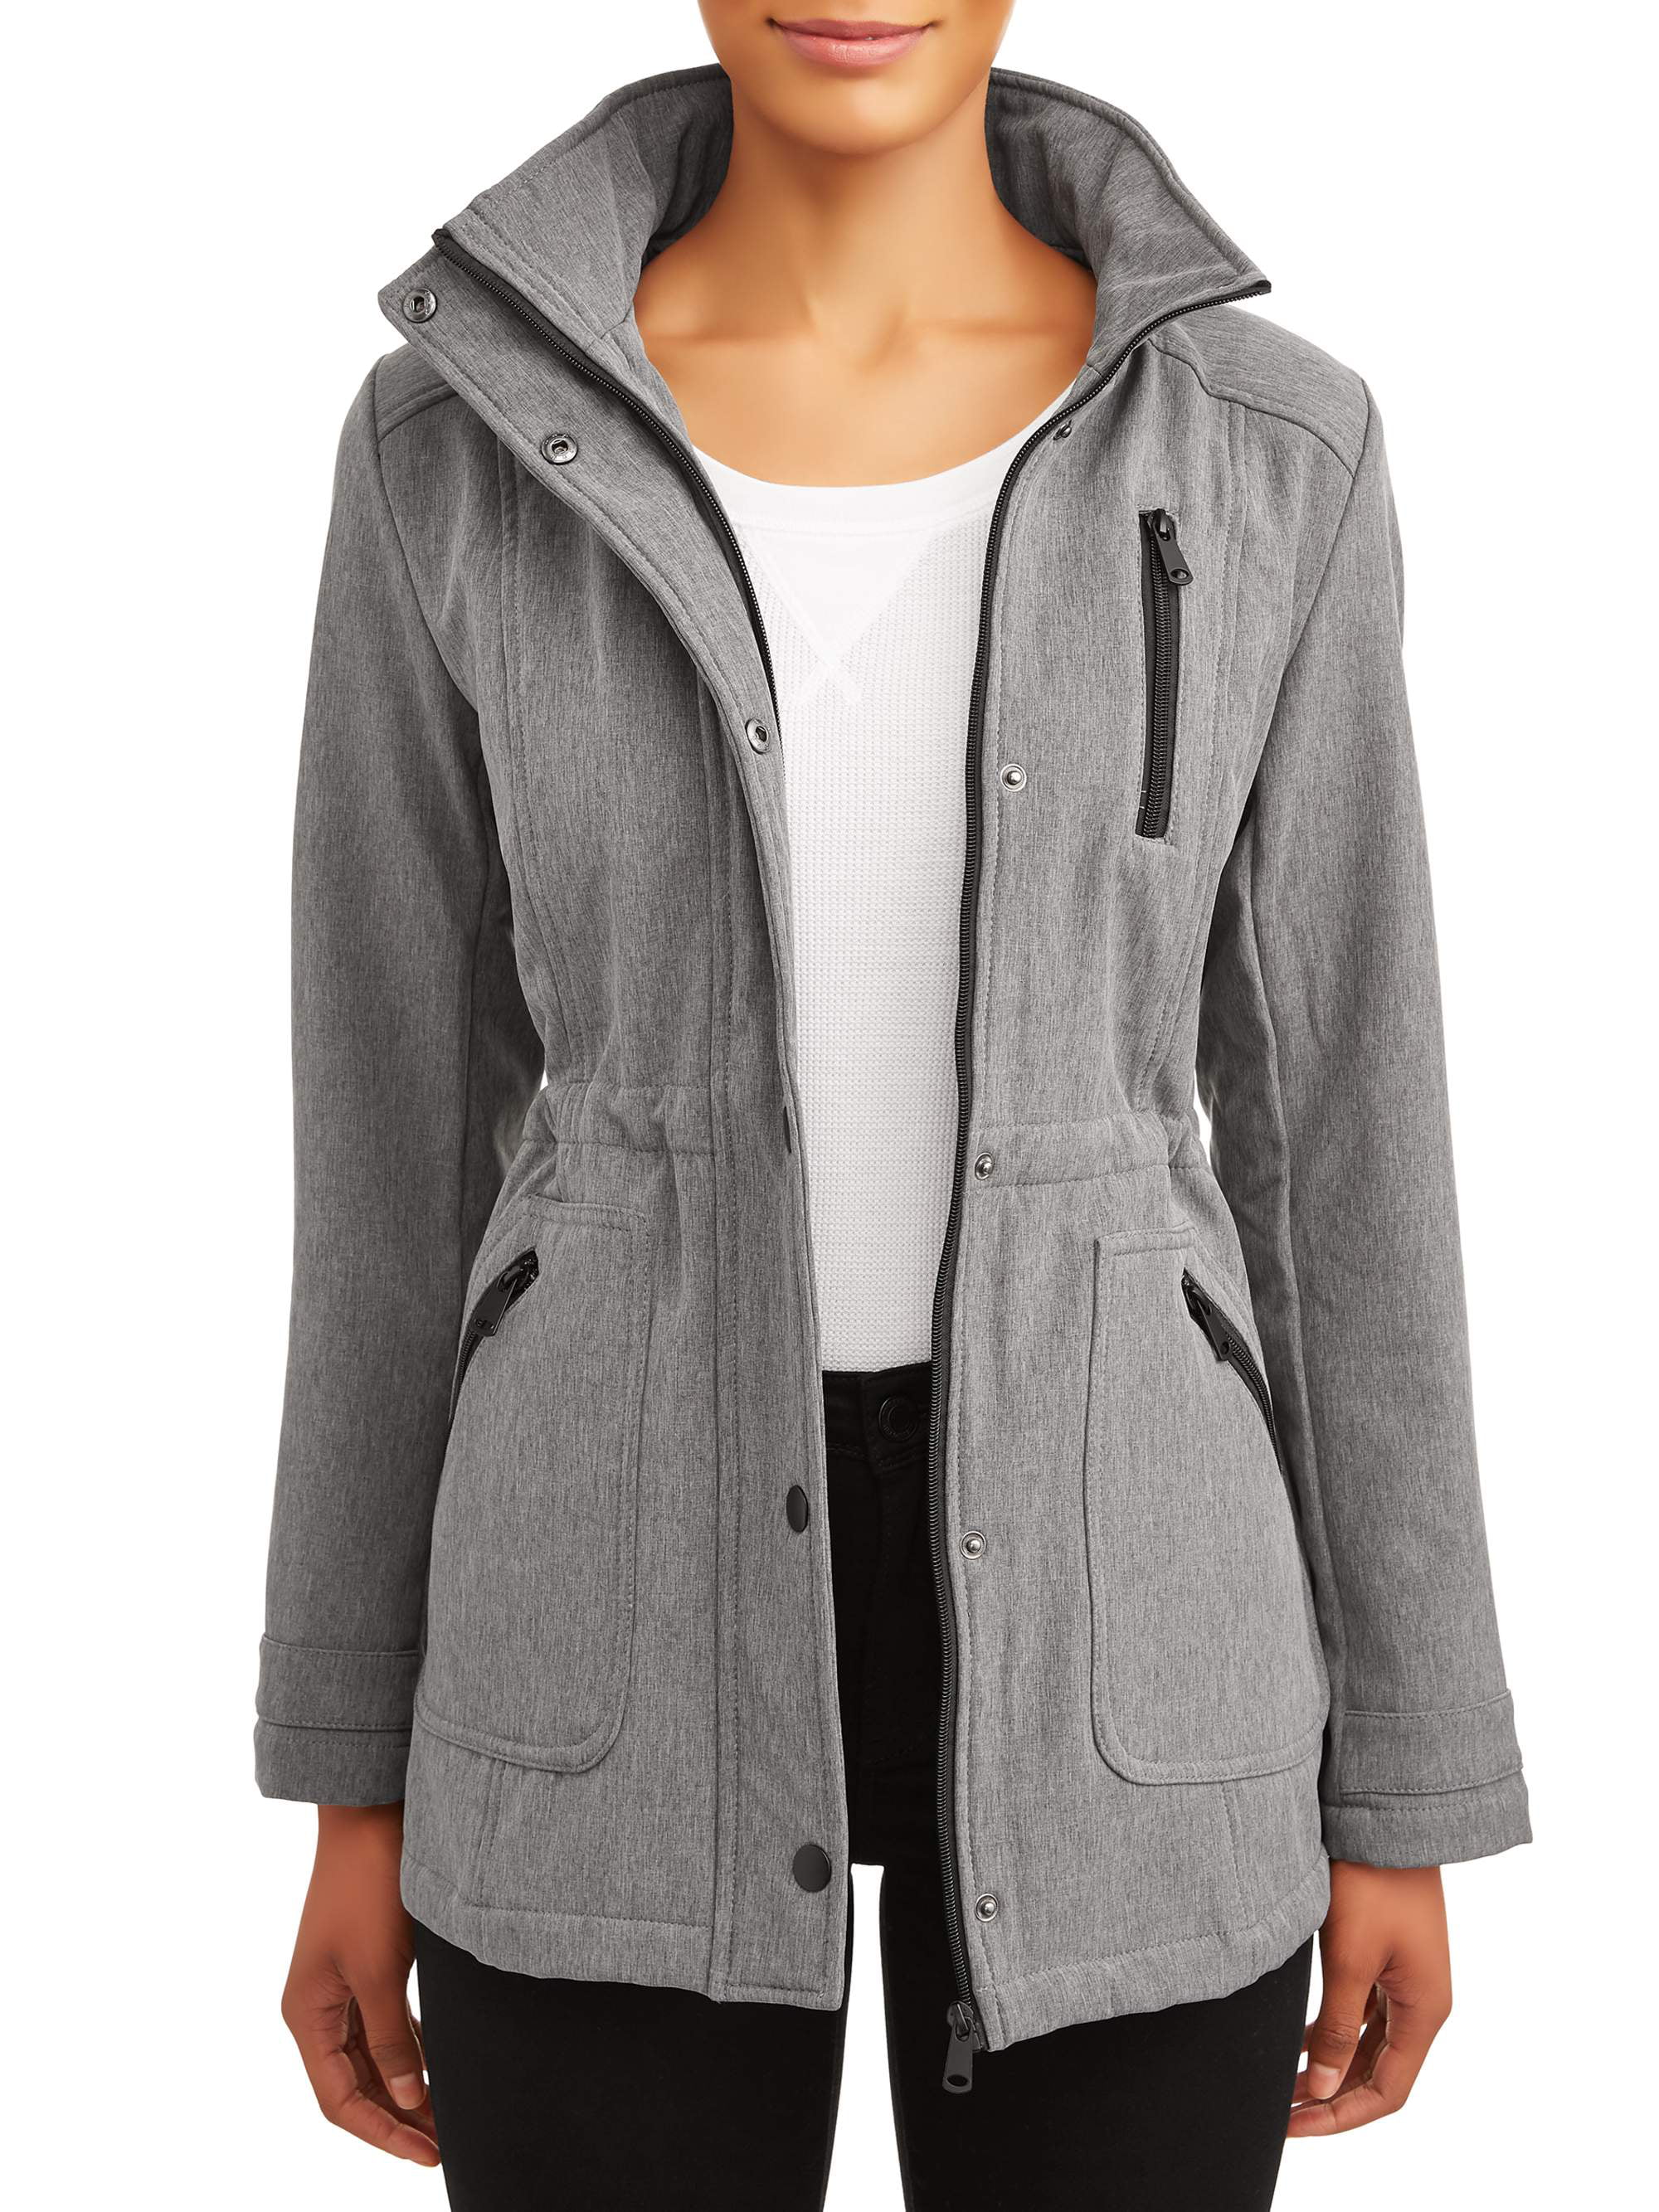 Big Chill Women's Fleece Bonded Soft Shell Jacket - Walmart.com